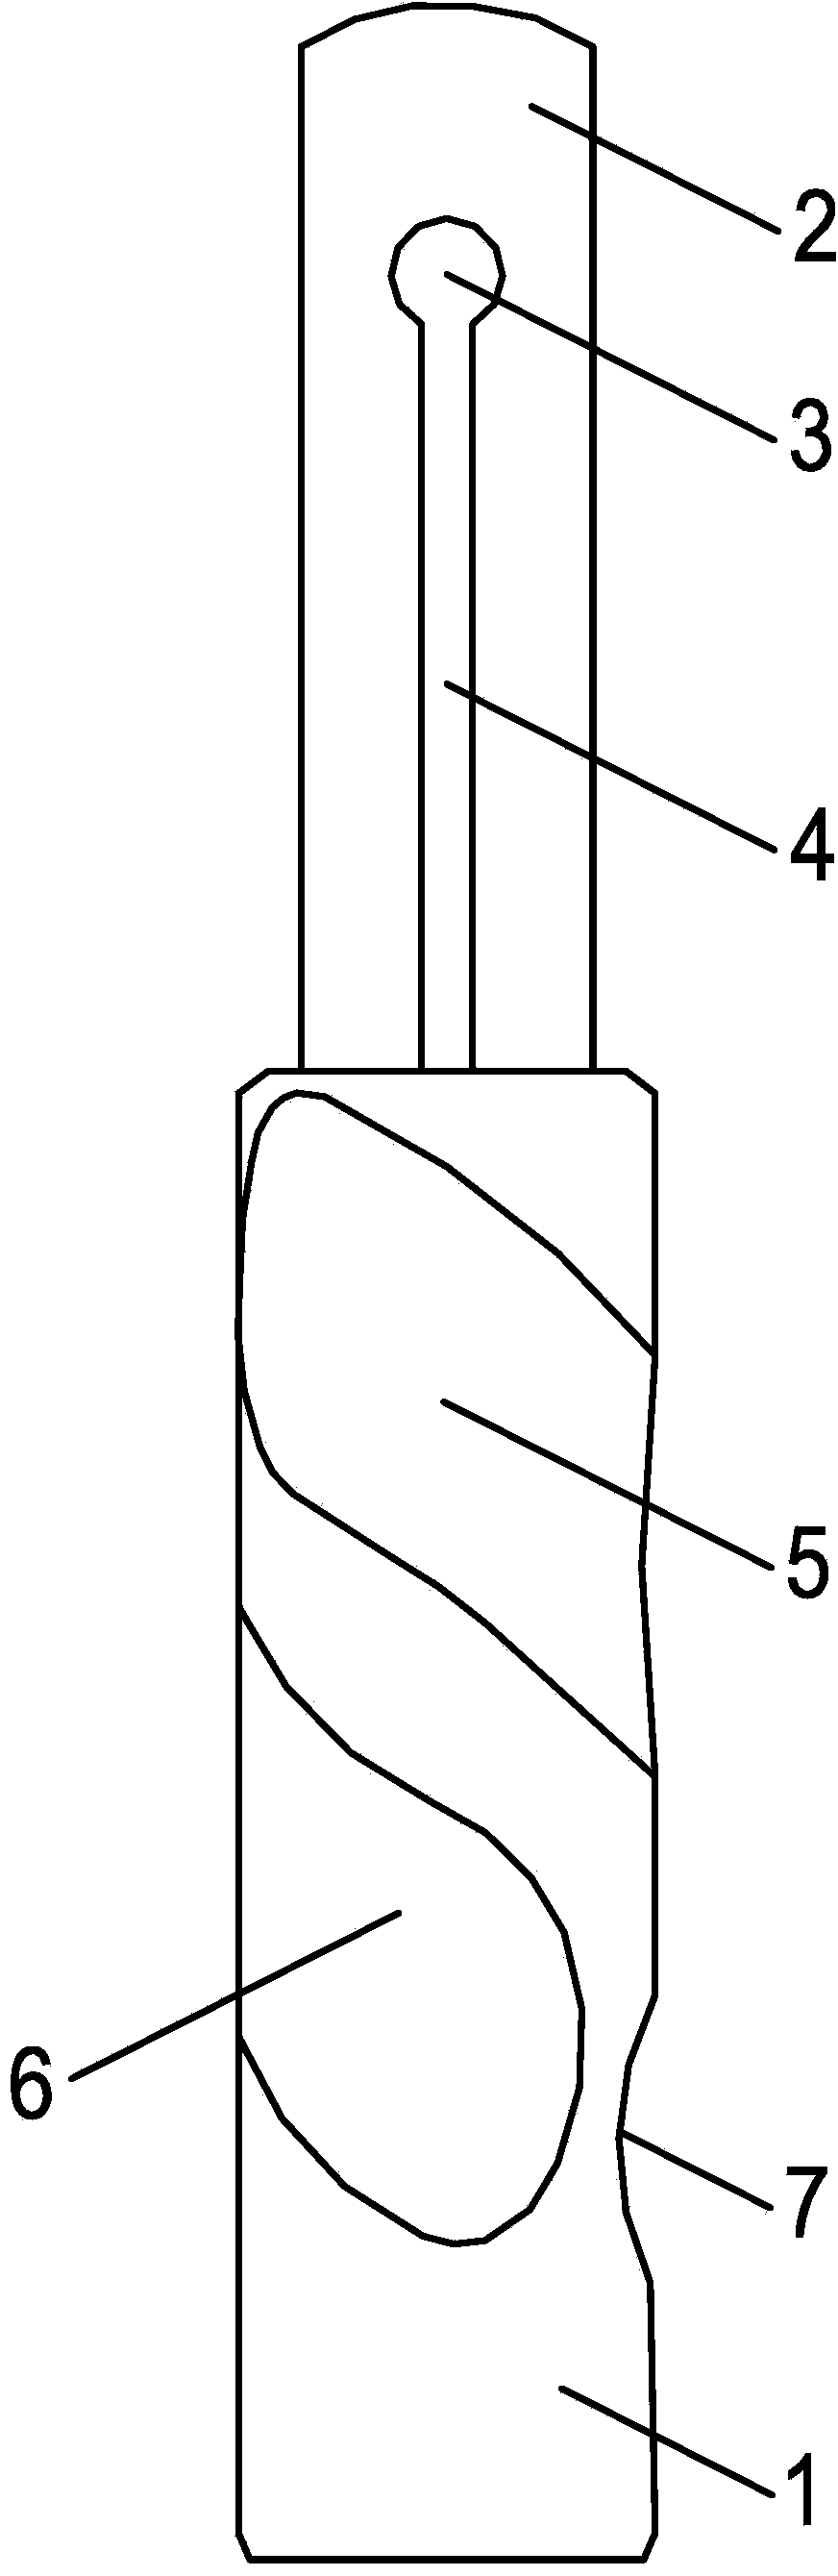 Vertical key piston of brass instrument